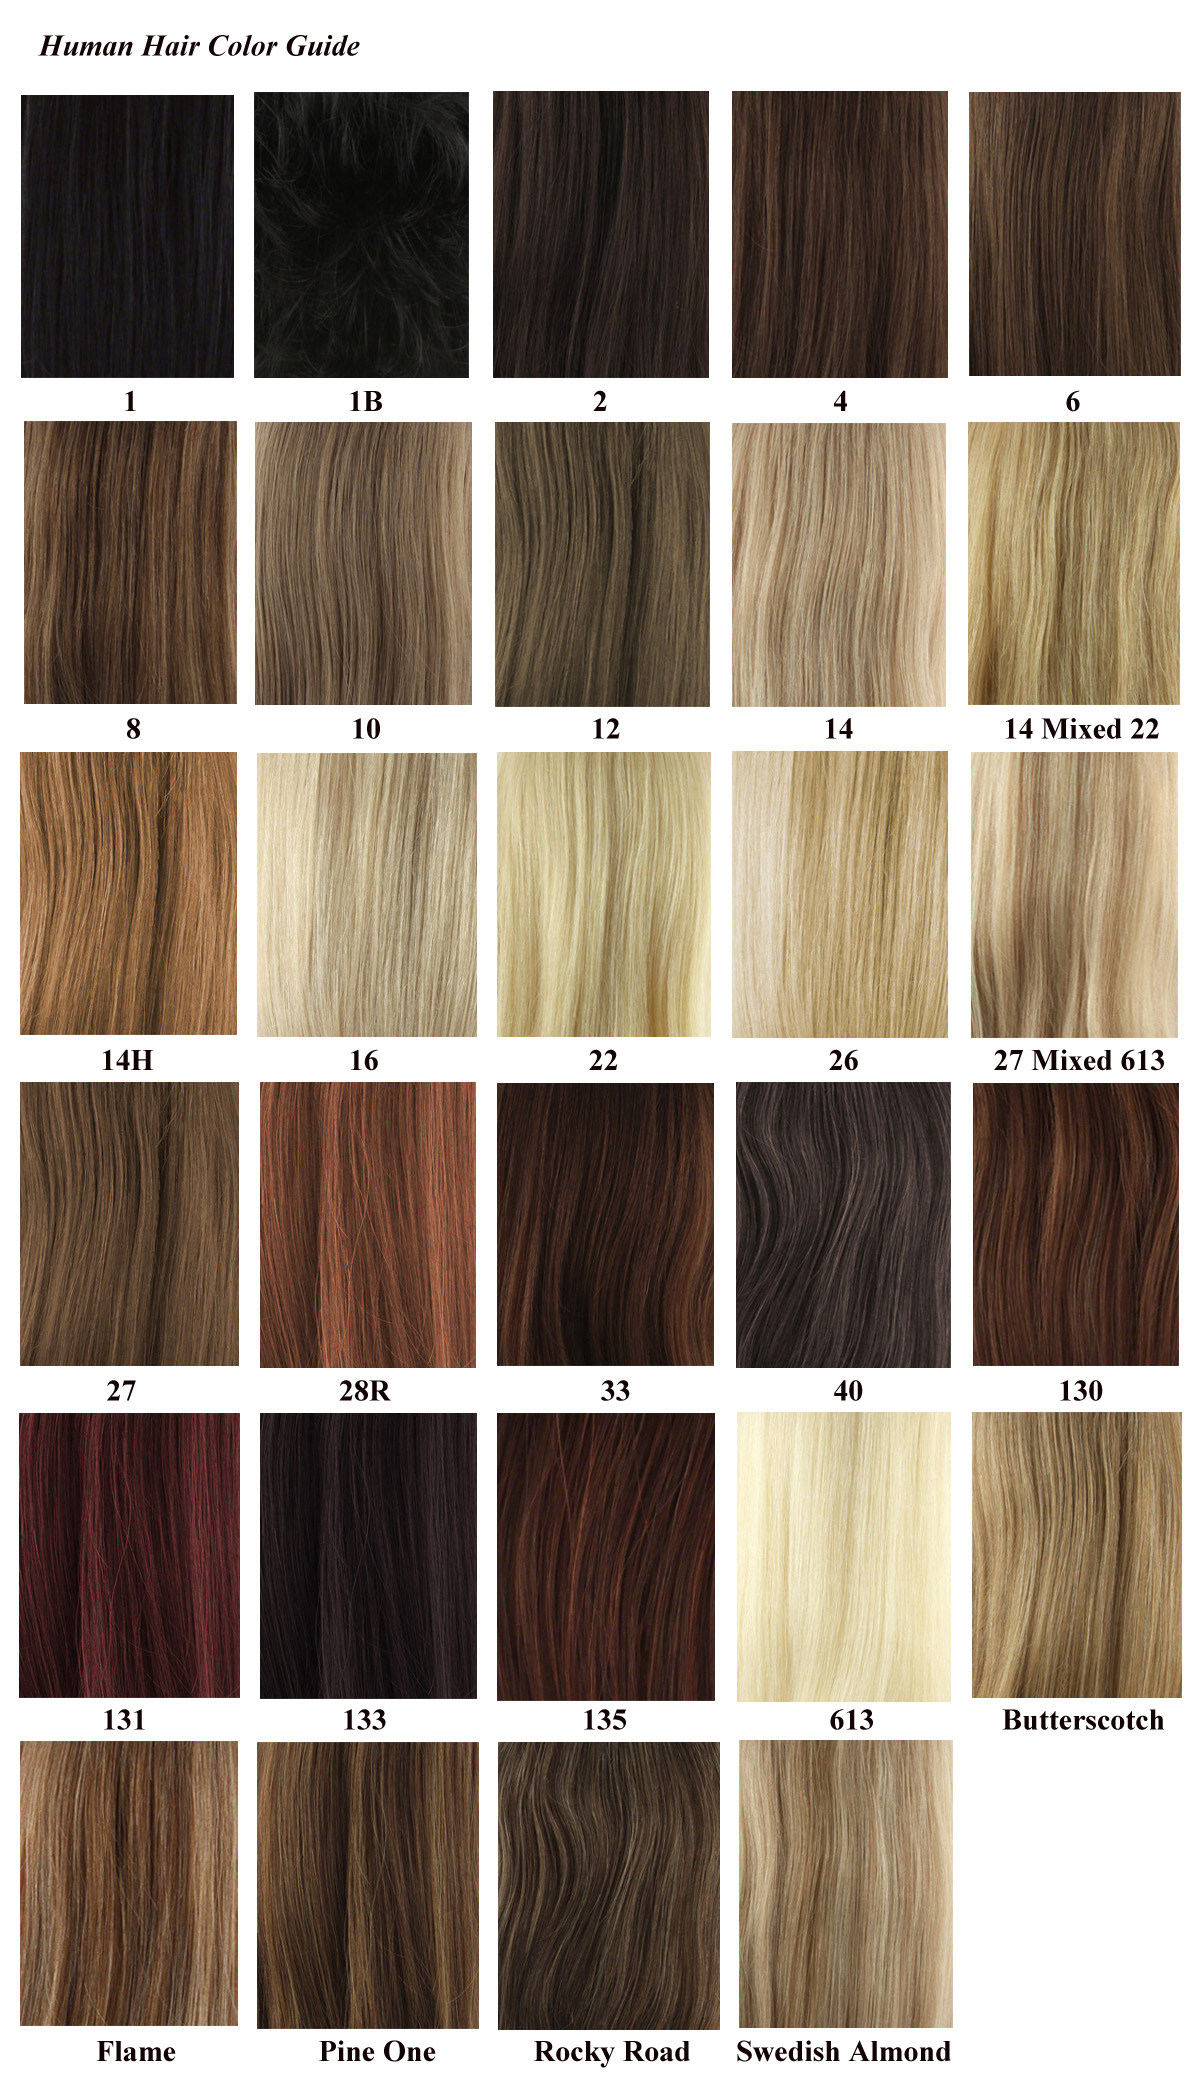 Lace Wig Color Chart